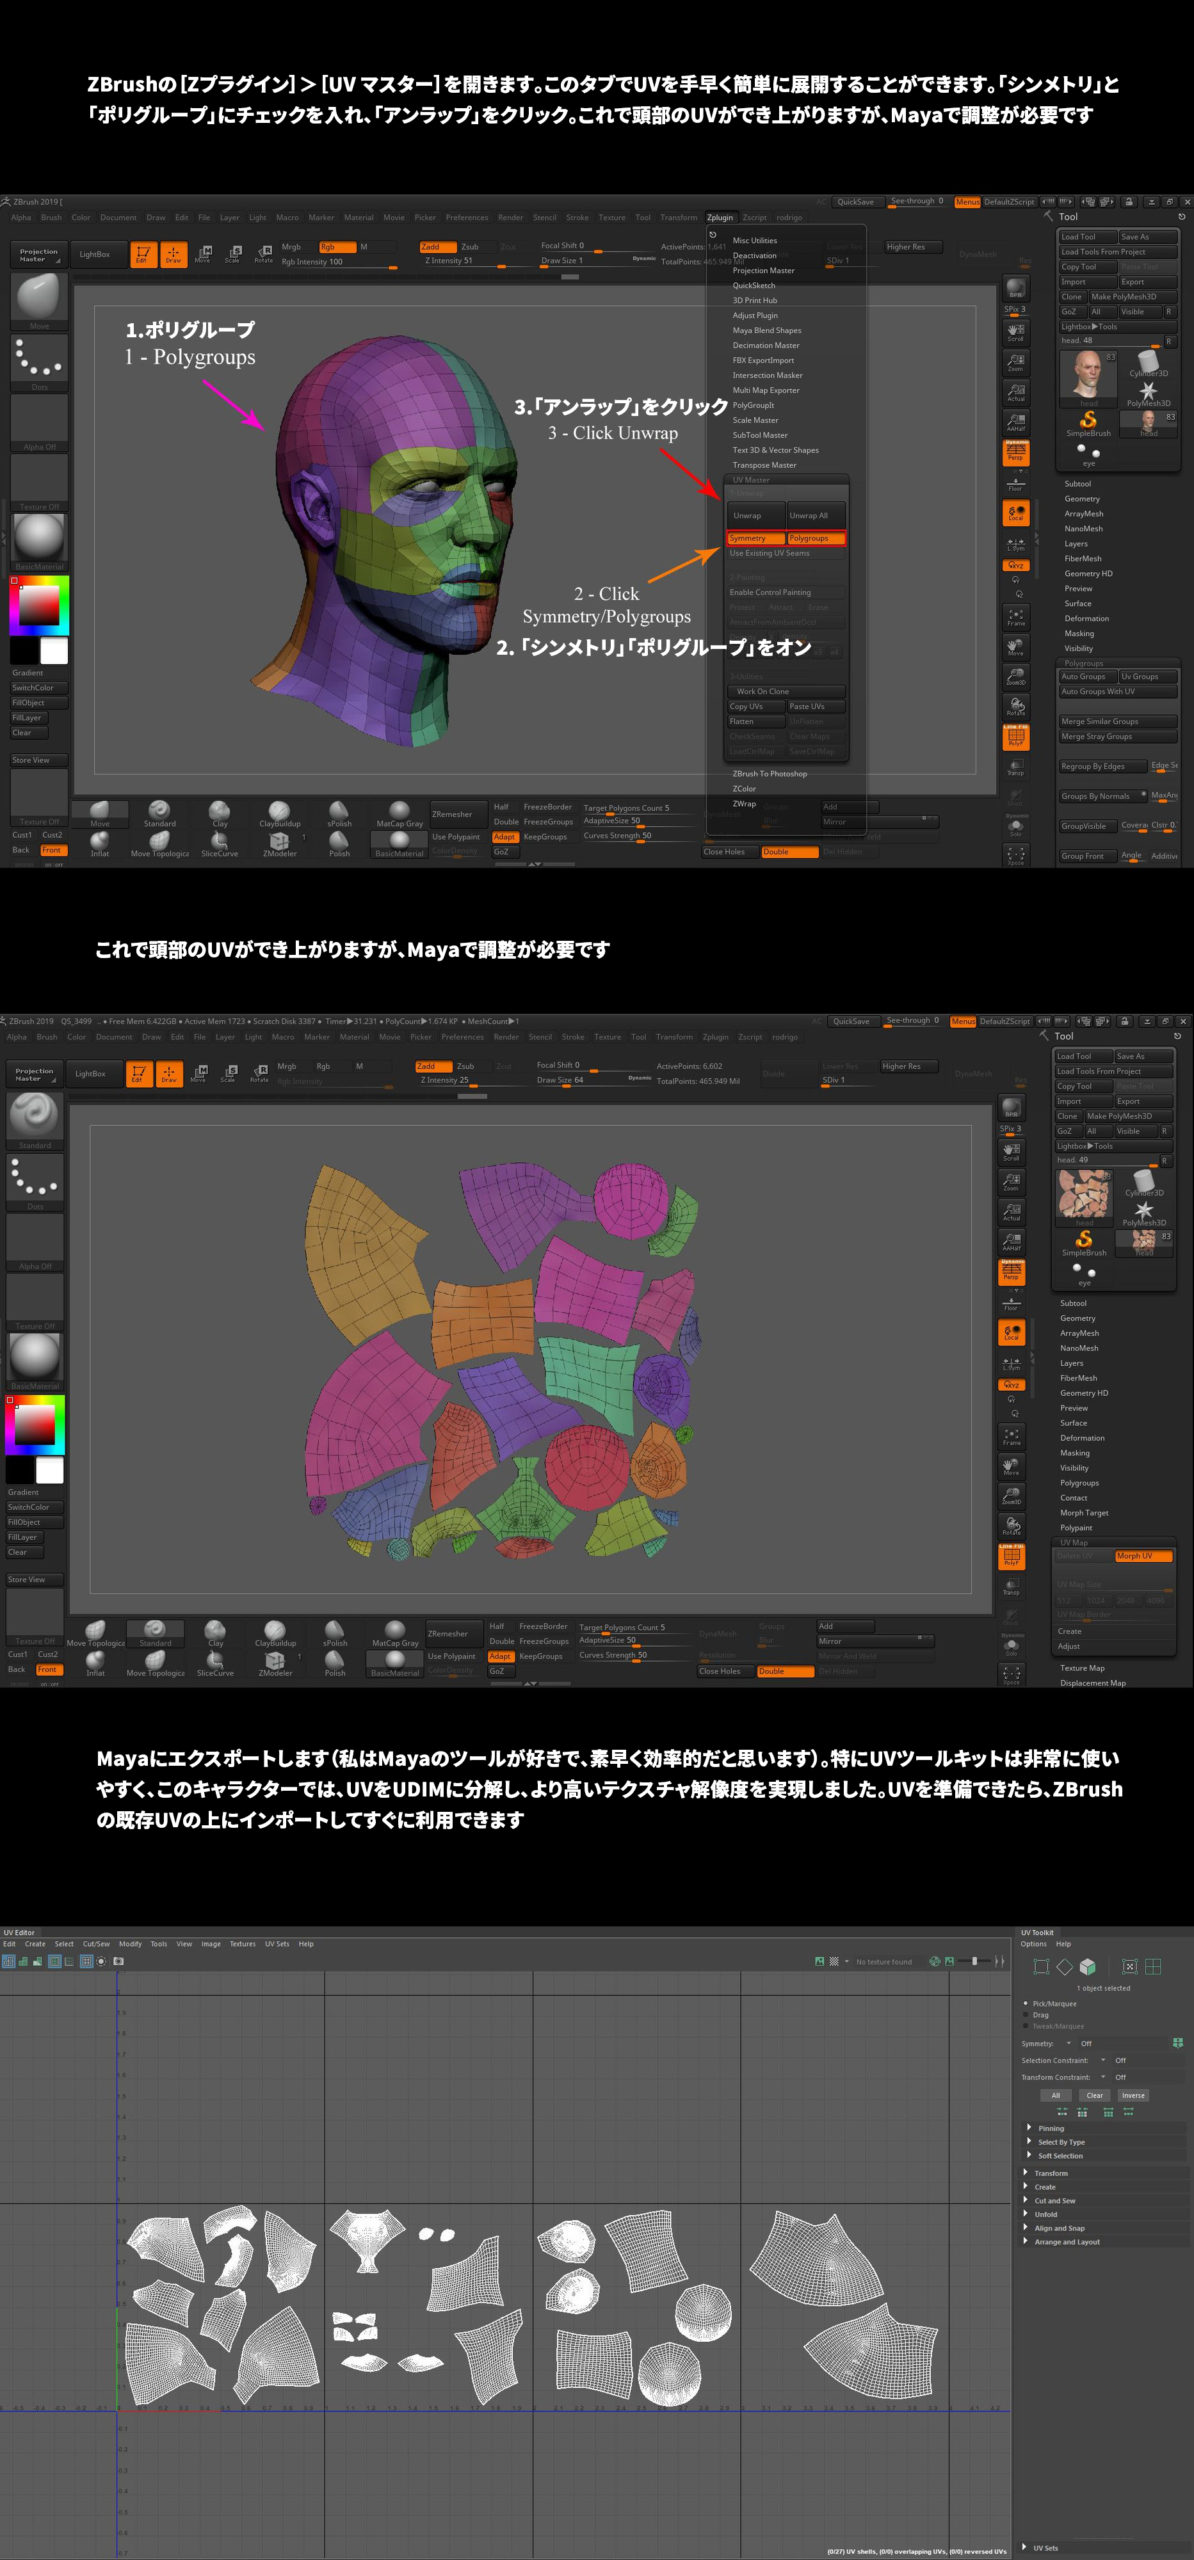 Zbrush Maya 使用 サイバーパンクキャラクターのメイキング 3dtotal 日本語オフィシャルサイト